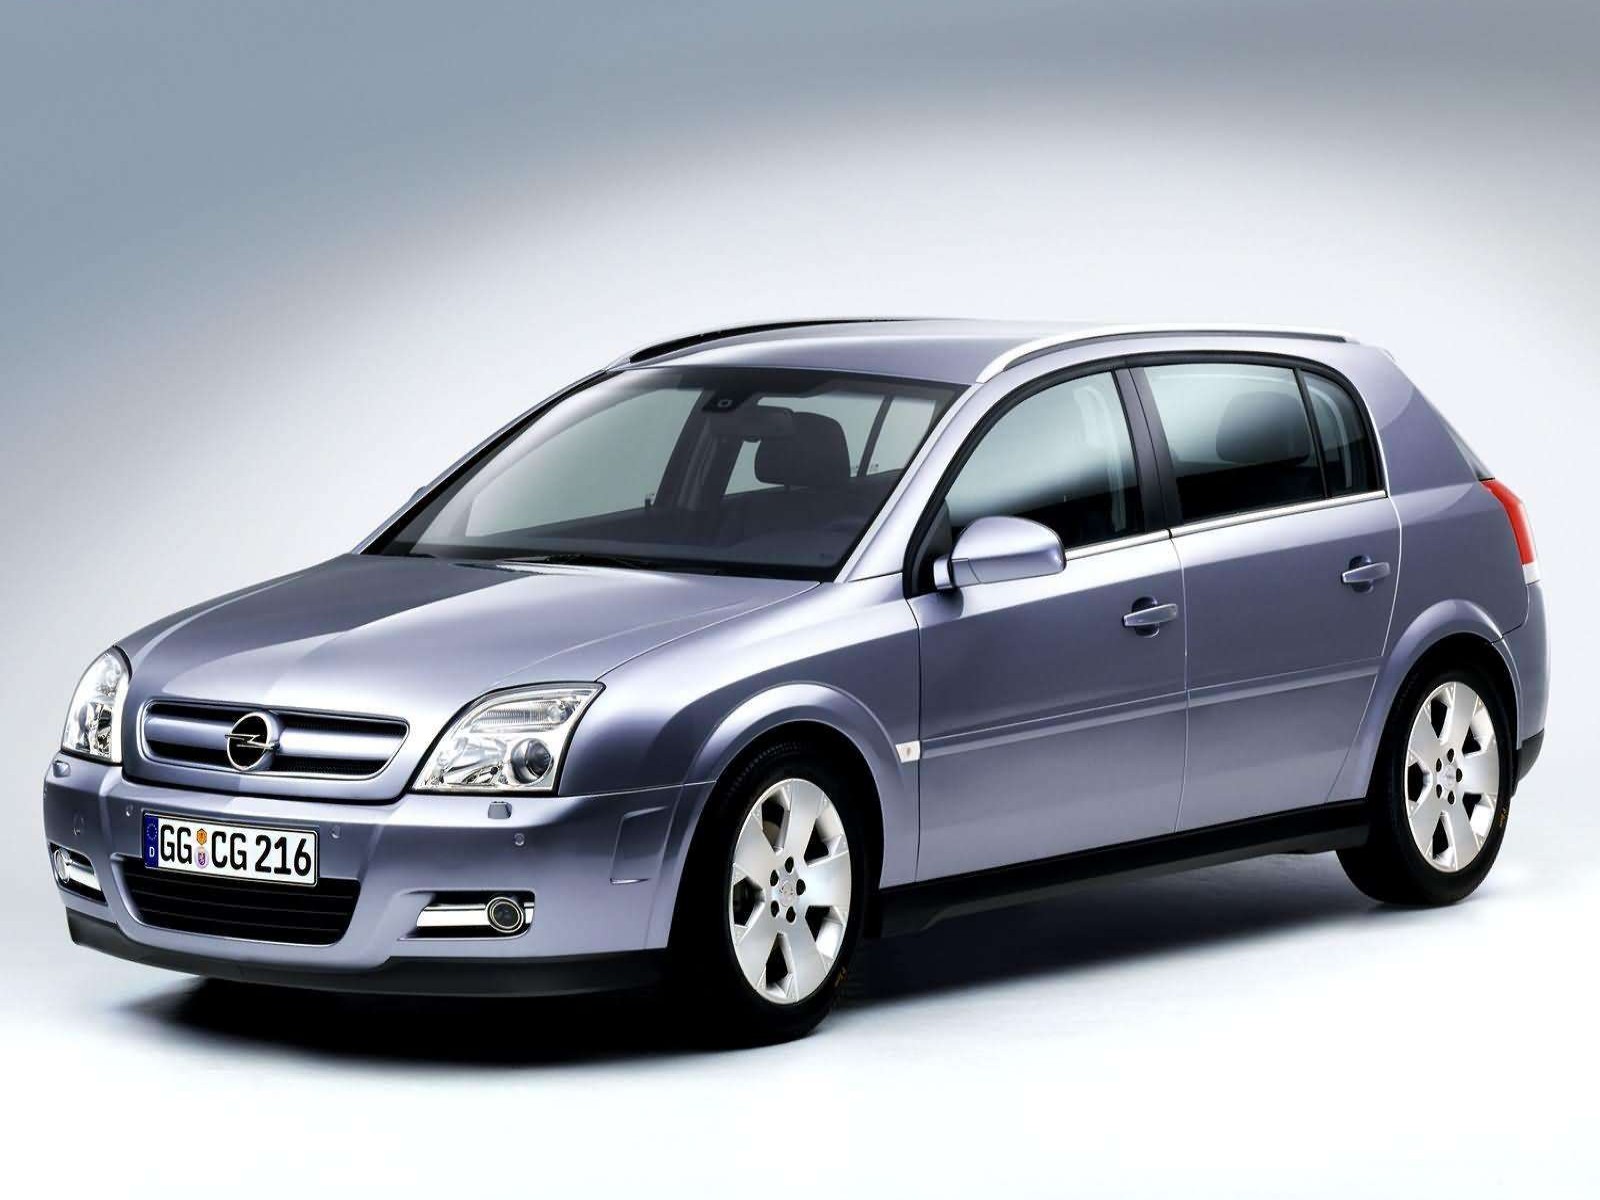 Opel Signum 3.2 V6 2003 · Opel 12:38 PM. Opel Signum 3.2 V6 2003